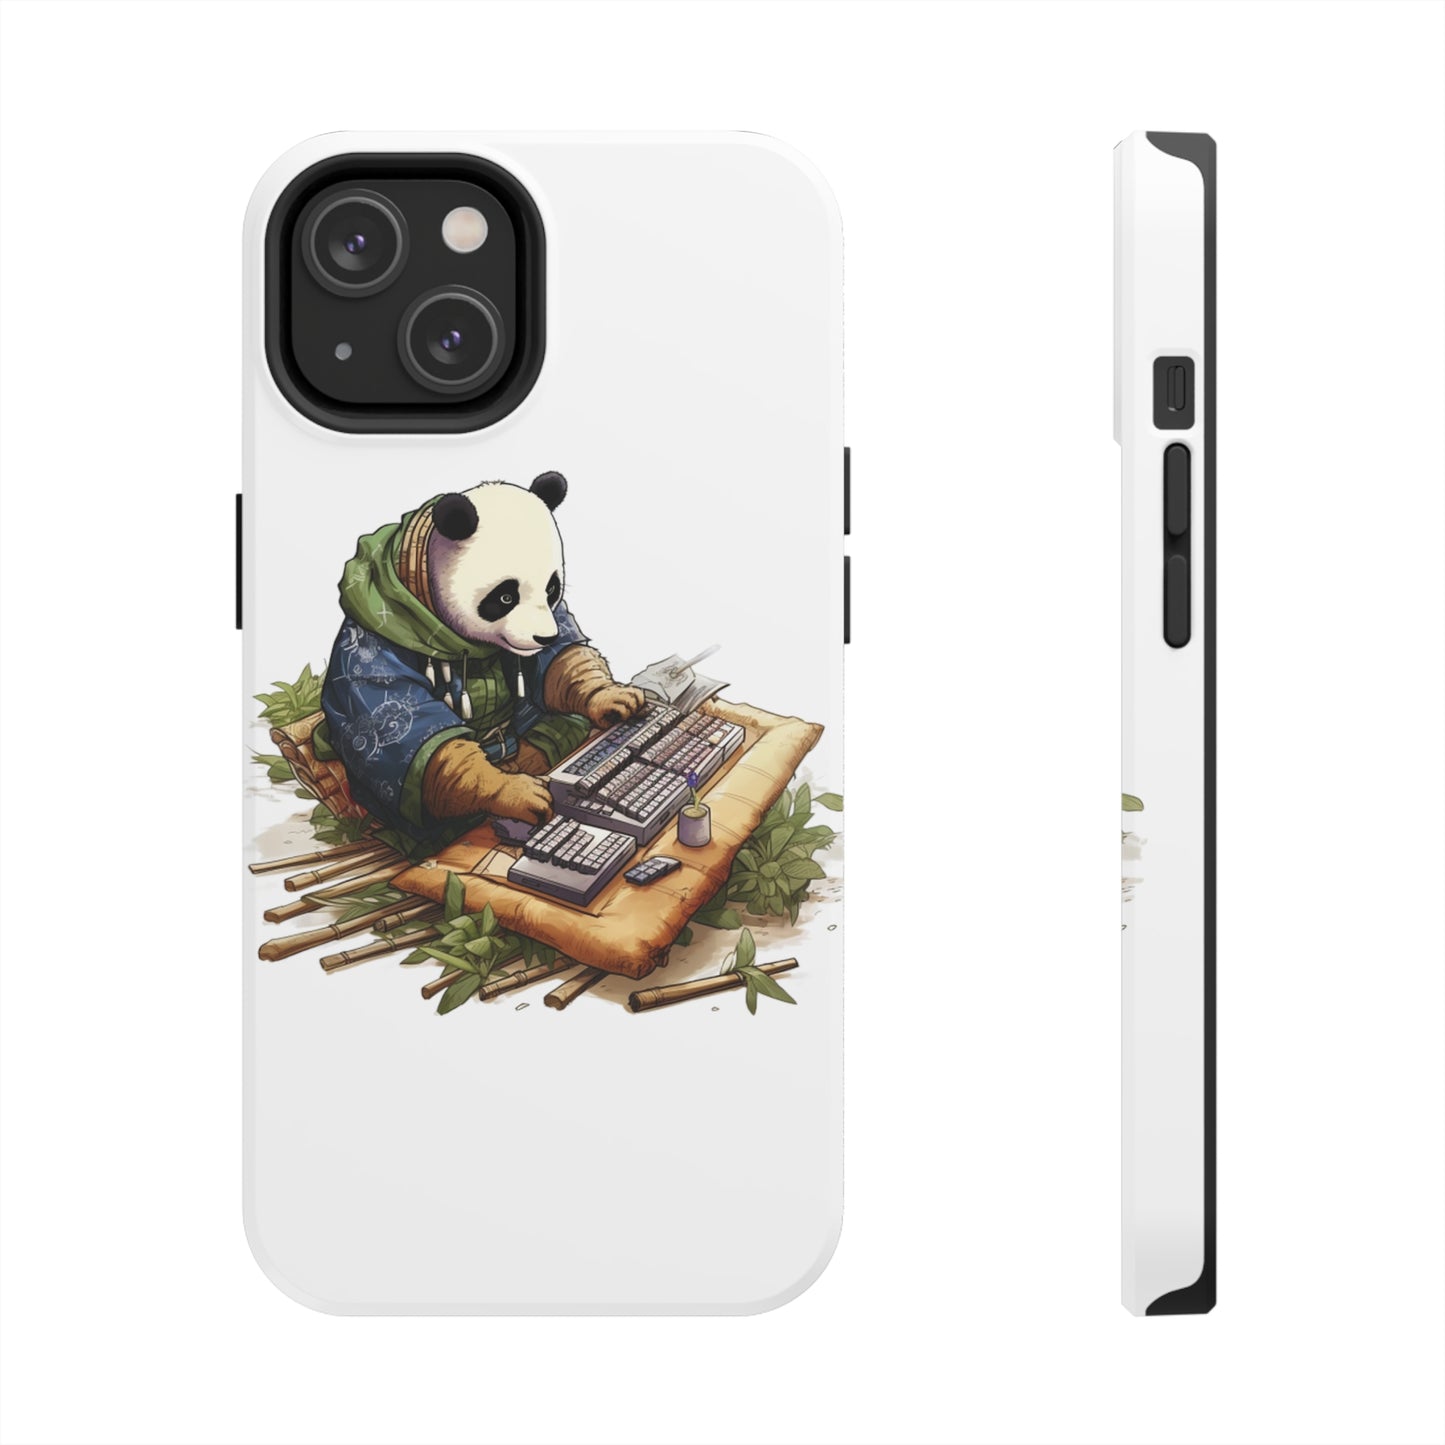 Panda Coding Cases: Tough Phone Cases with a Coding Panda Design